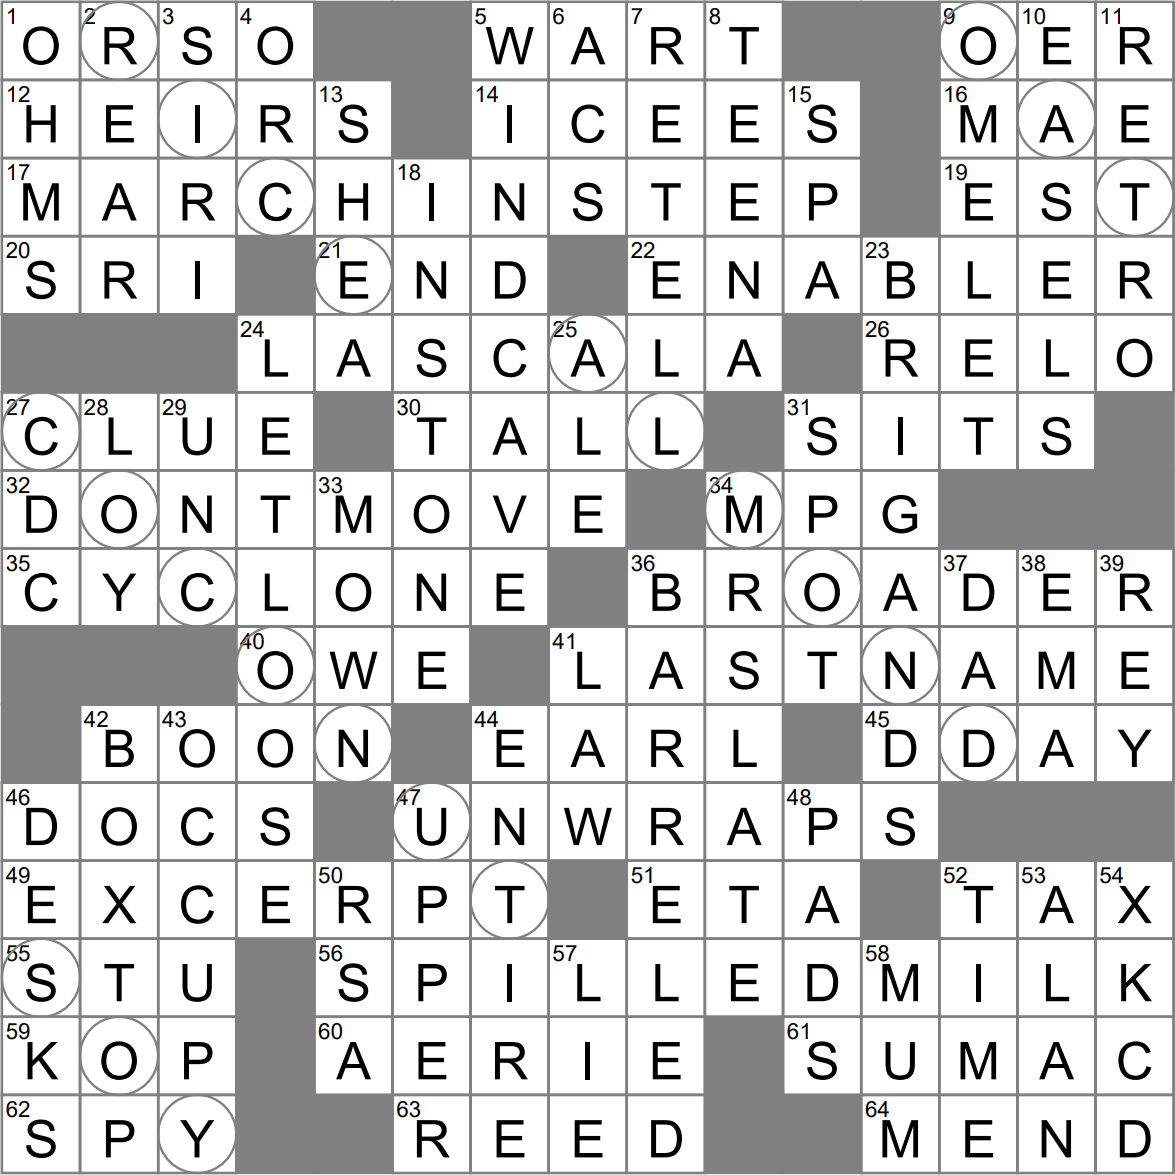 LA Times Crossword 8 Mar 23 Wednesday LAXCrossword com